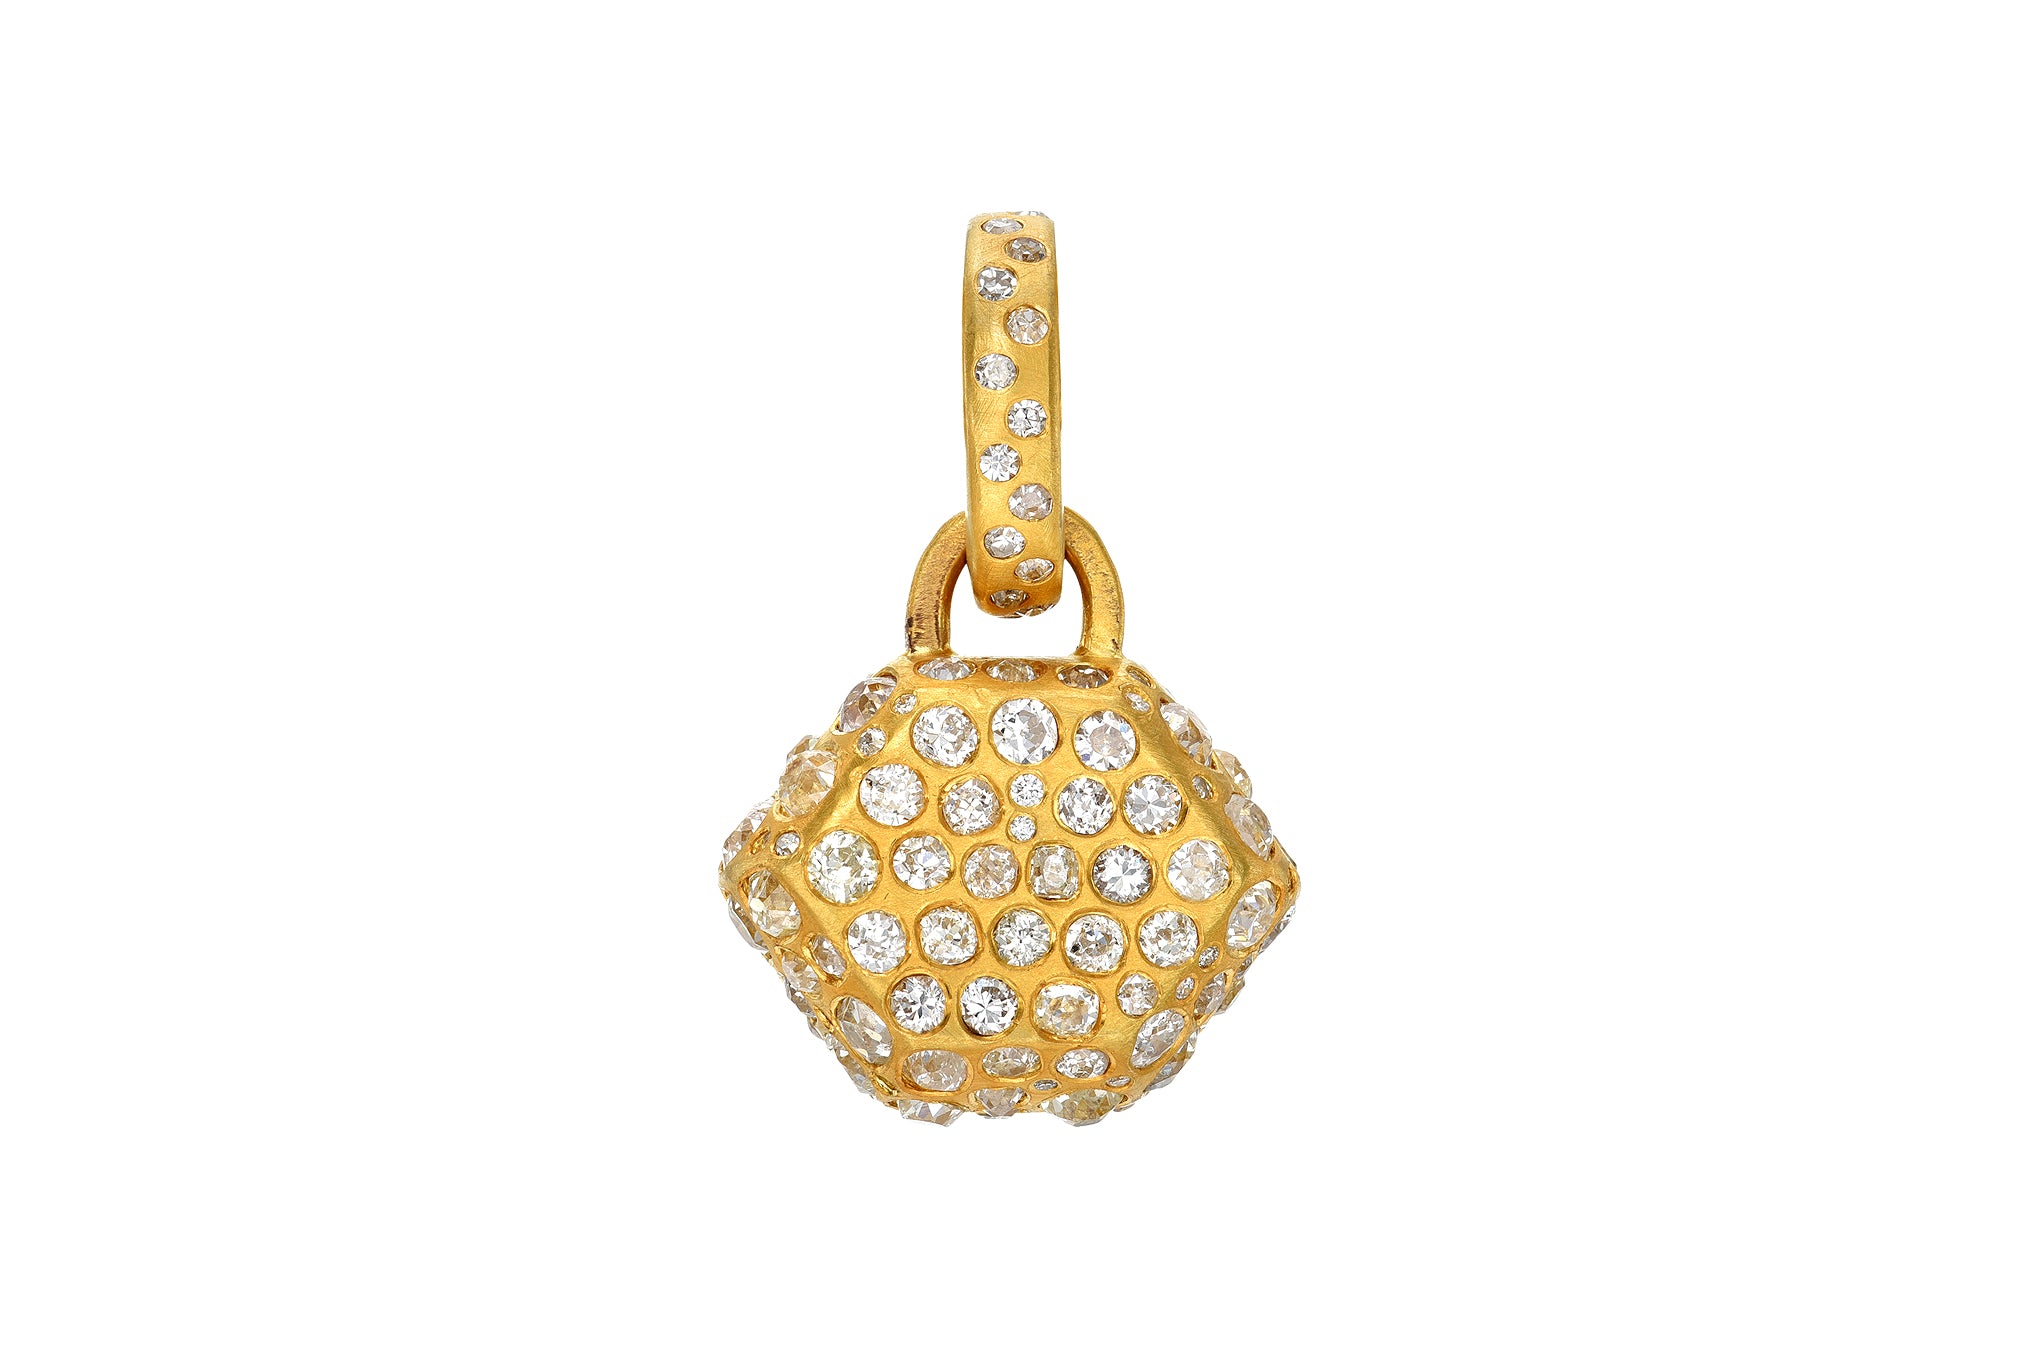 Darius Jewels one of a kind the moonstones emerald and diamond heirloom pendant